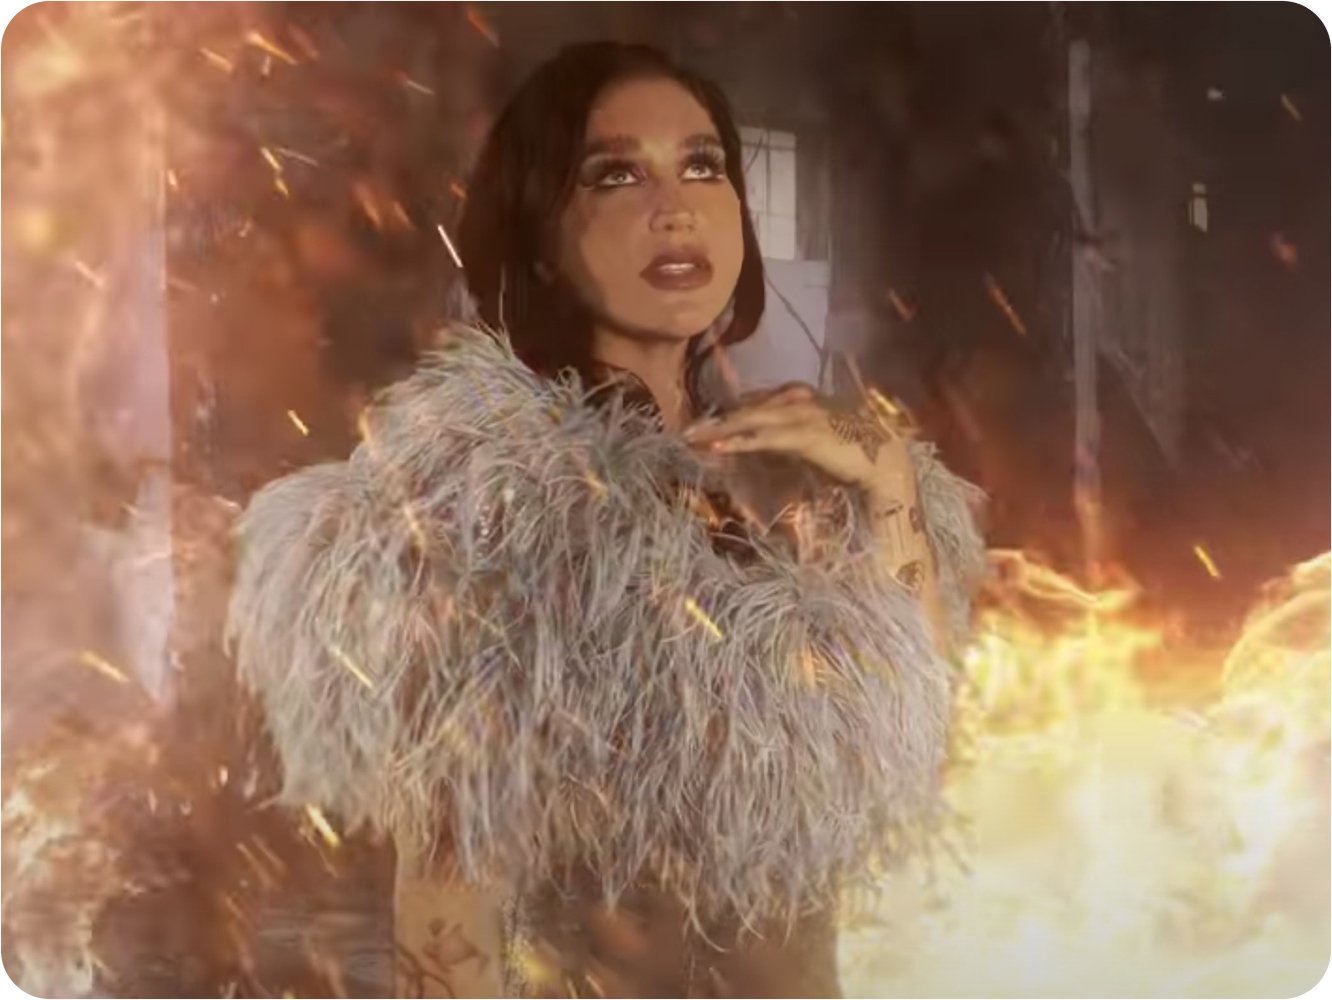  Romance gatuno trashy en el vídeo de ‘Little Bit Of Love’ de Kesha